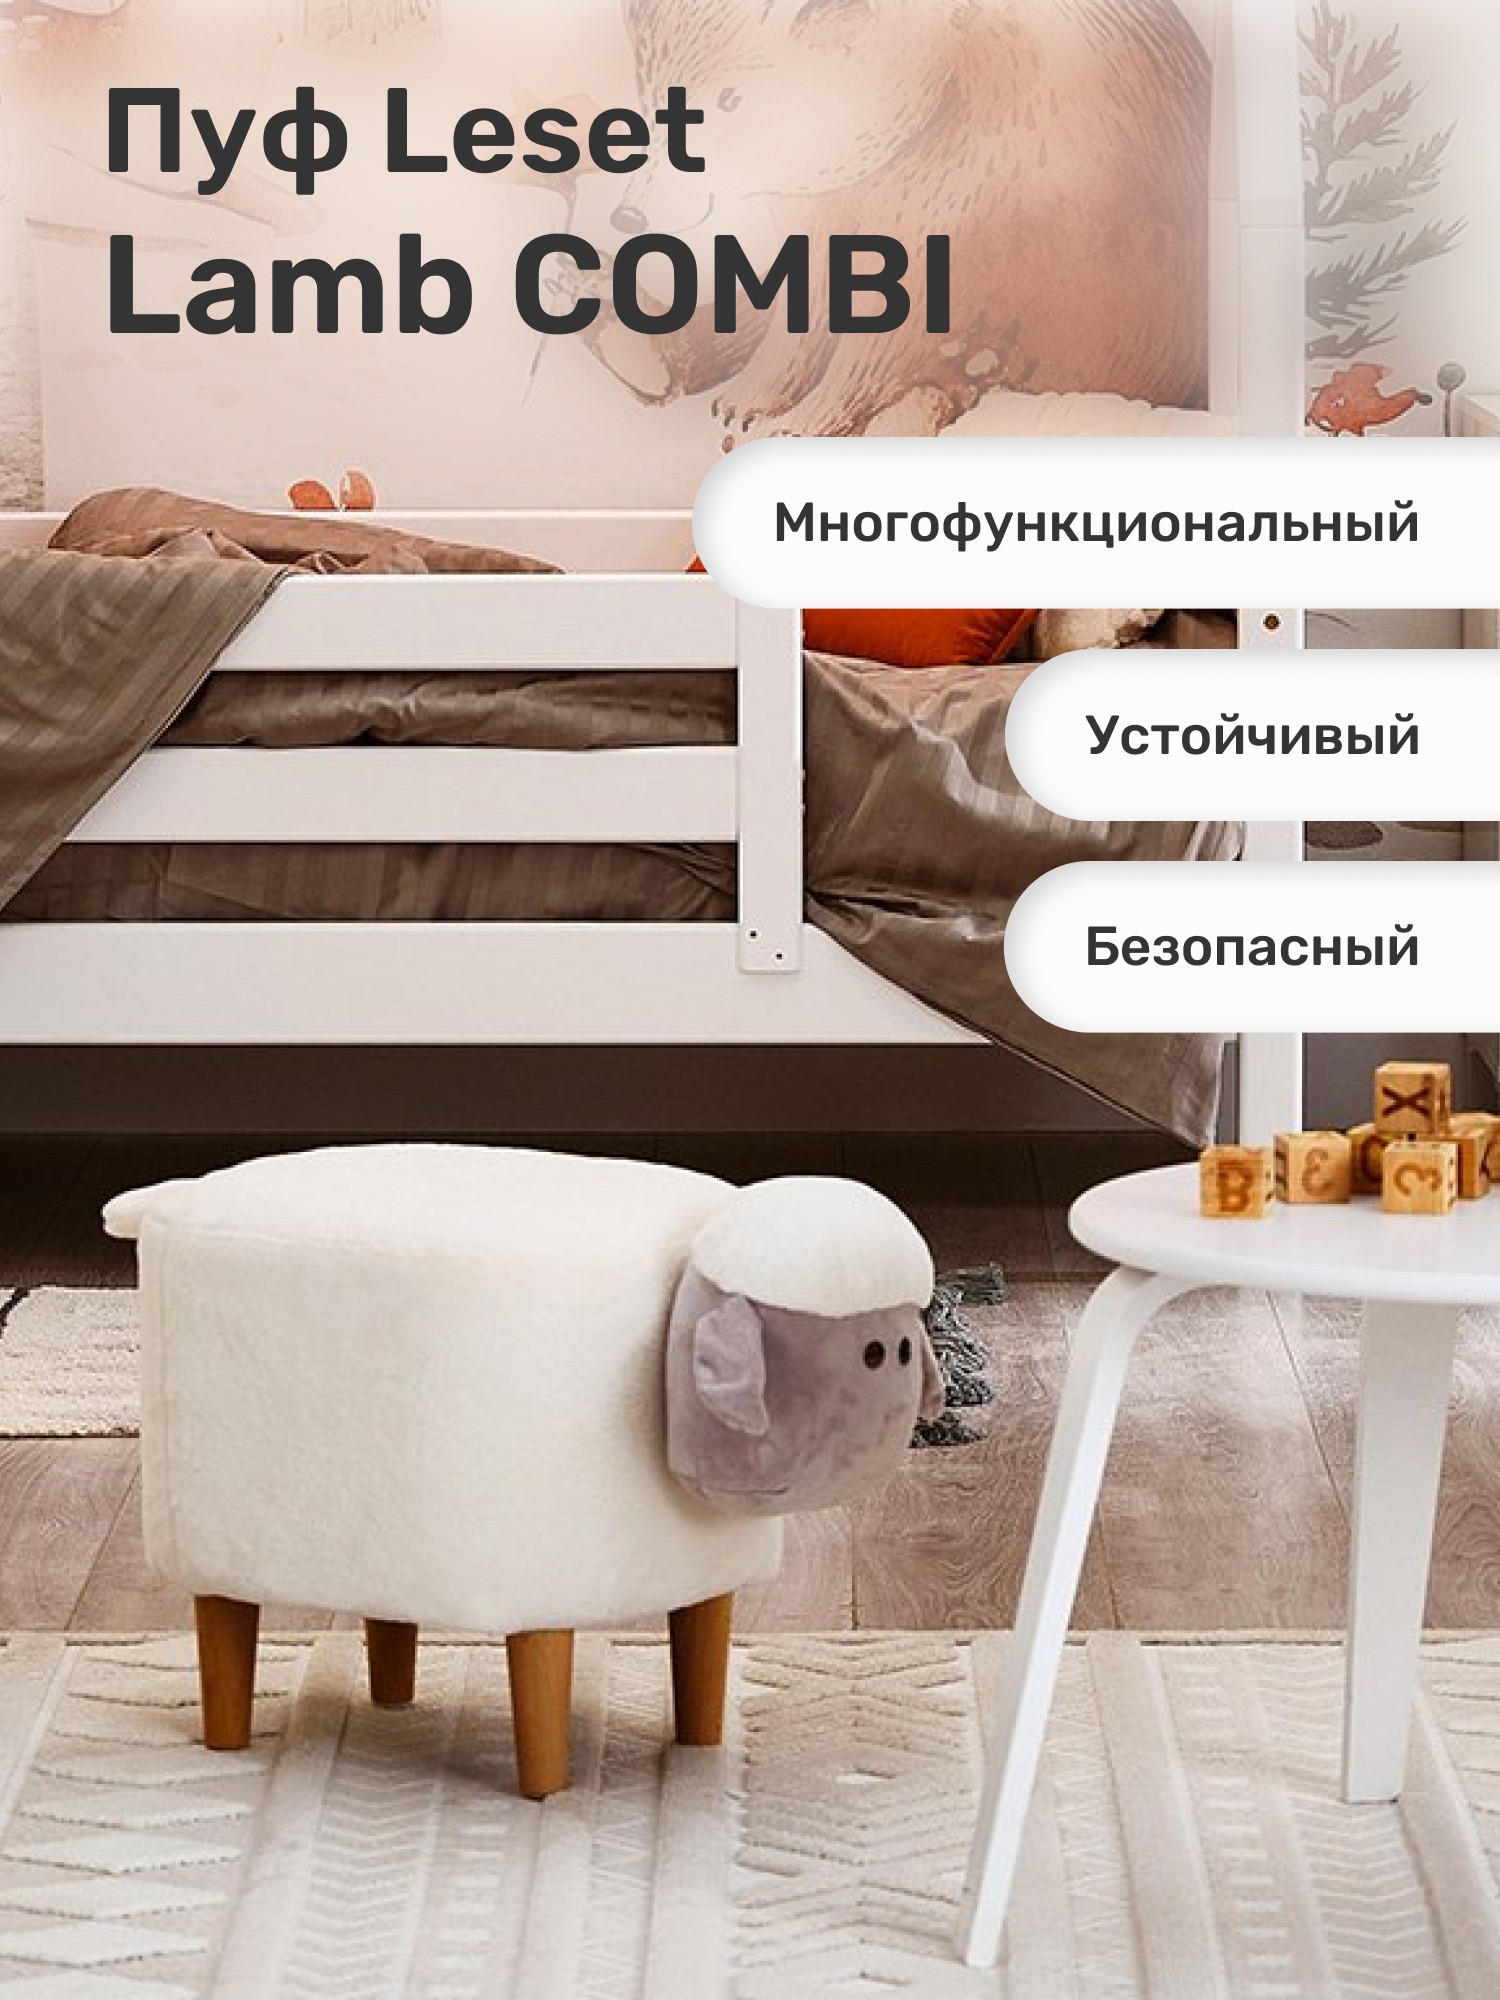 Пуф Leset Lamb COMBI мех - фото 1